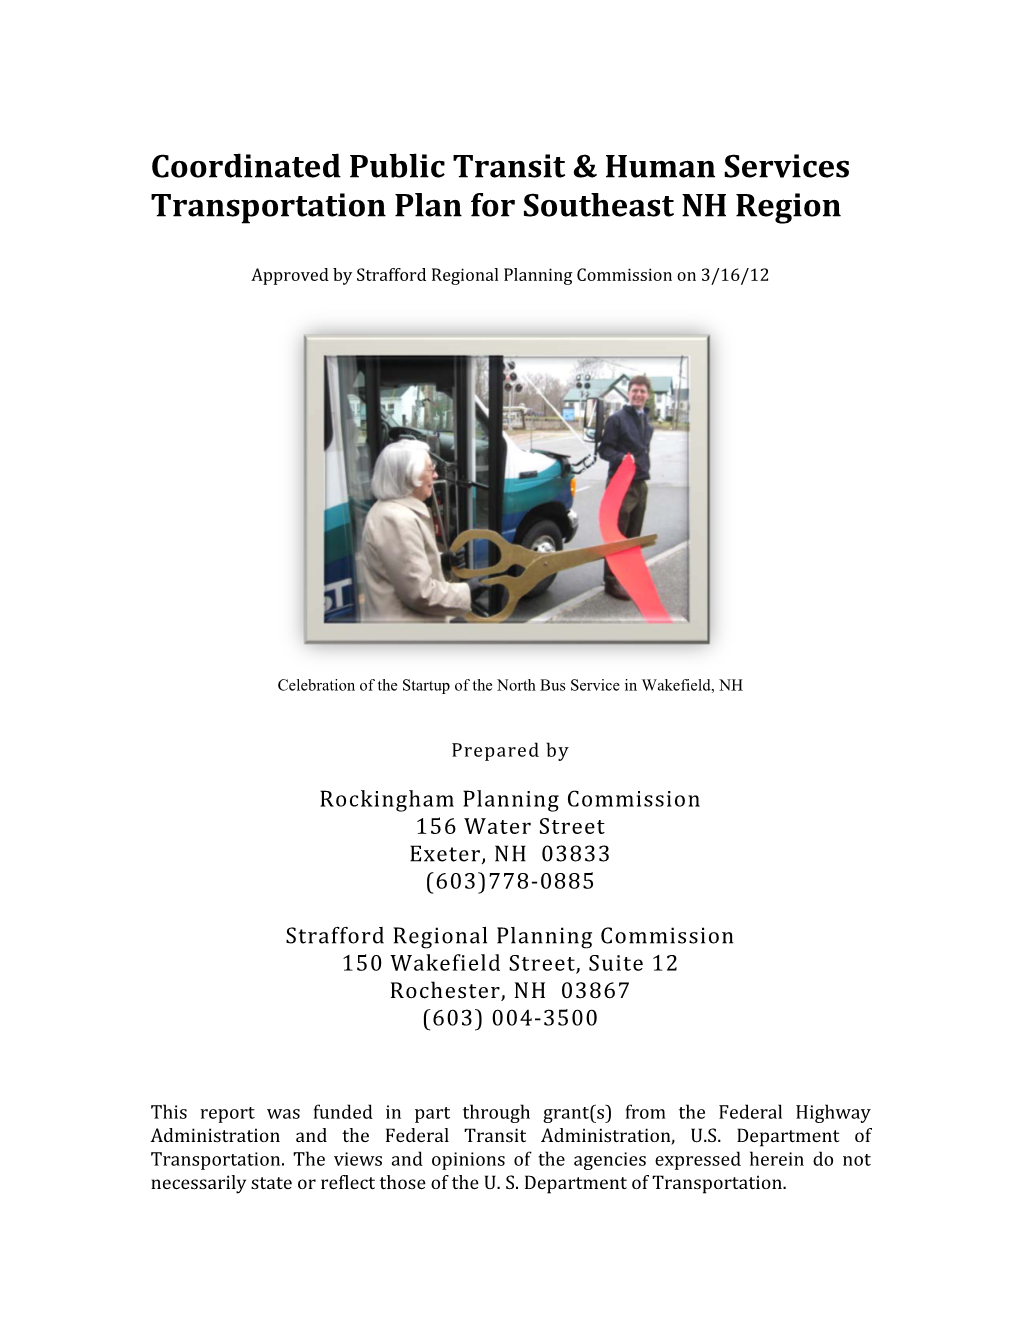 Final 2012 Coordinated Public Transit & Human Services Transportation